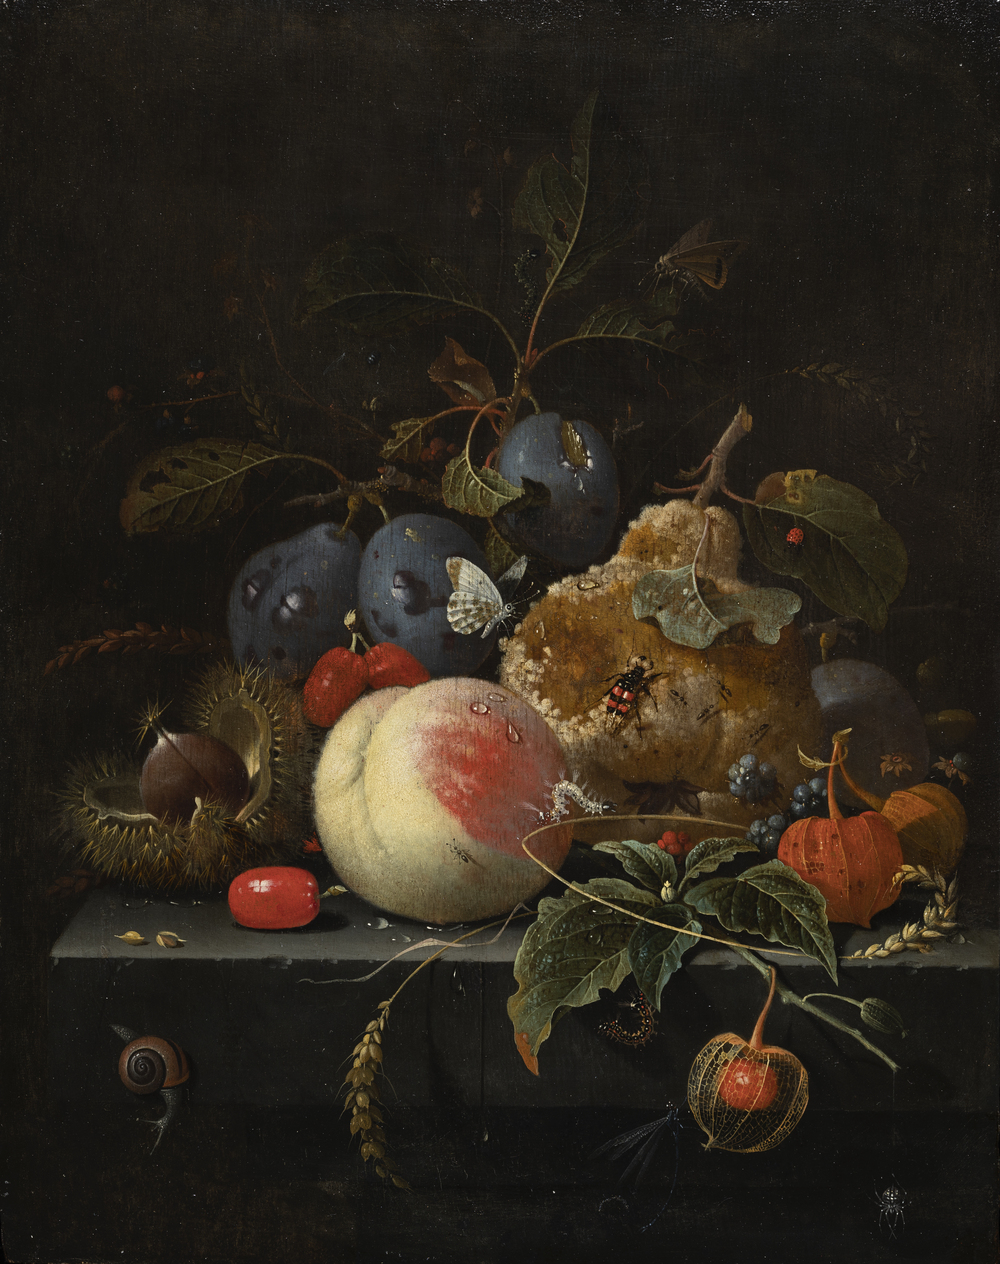 Bad Fruit: Rotten Fruits Transformed into Art Piece